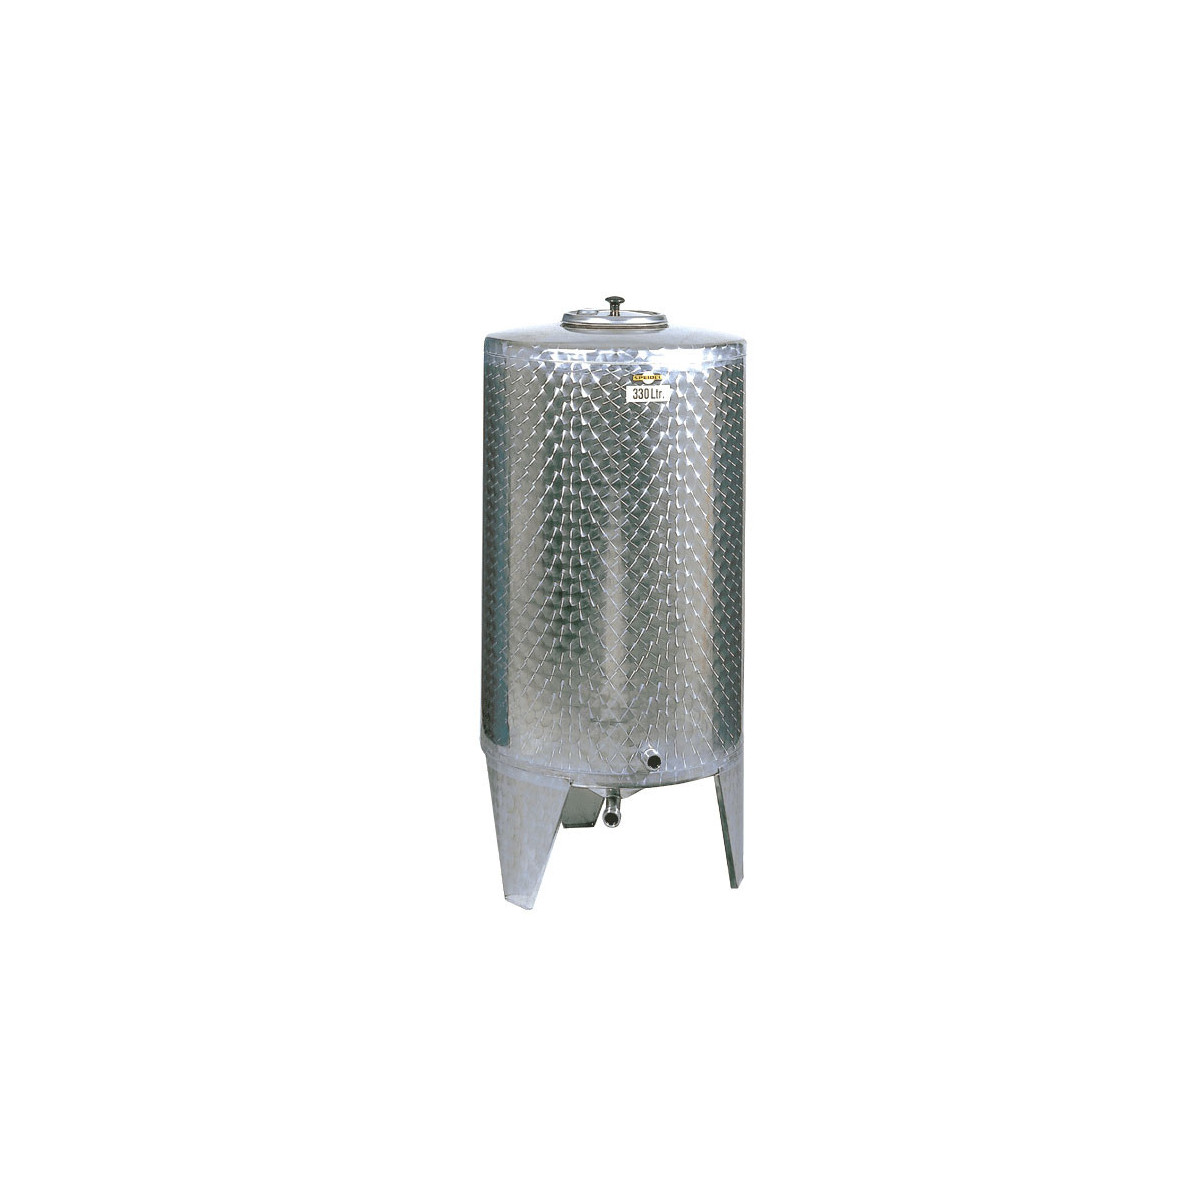 SPEIDEL fermentation tank FD 525 liters